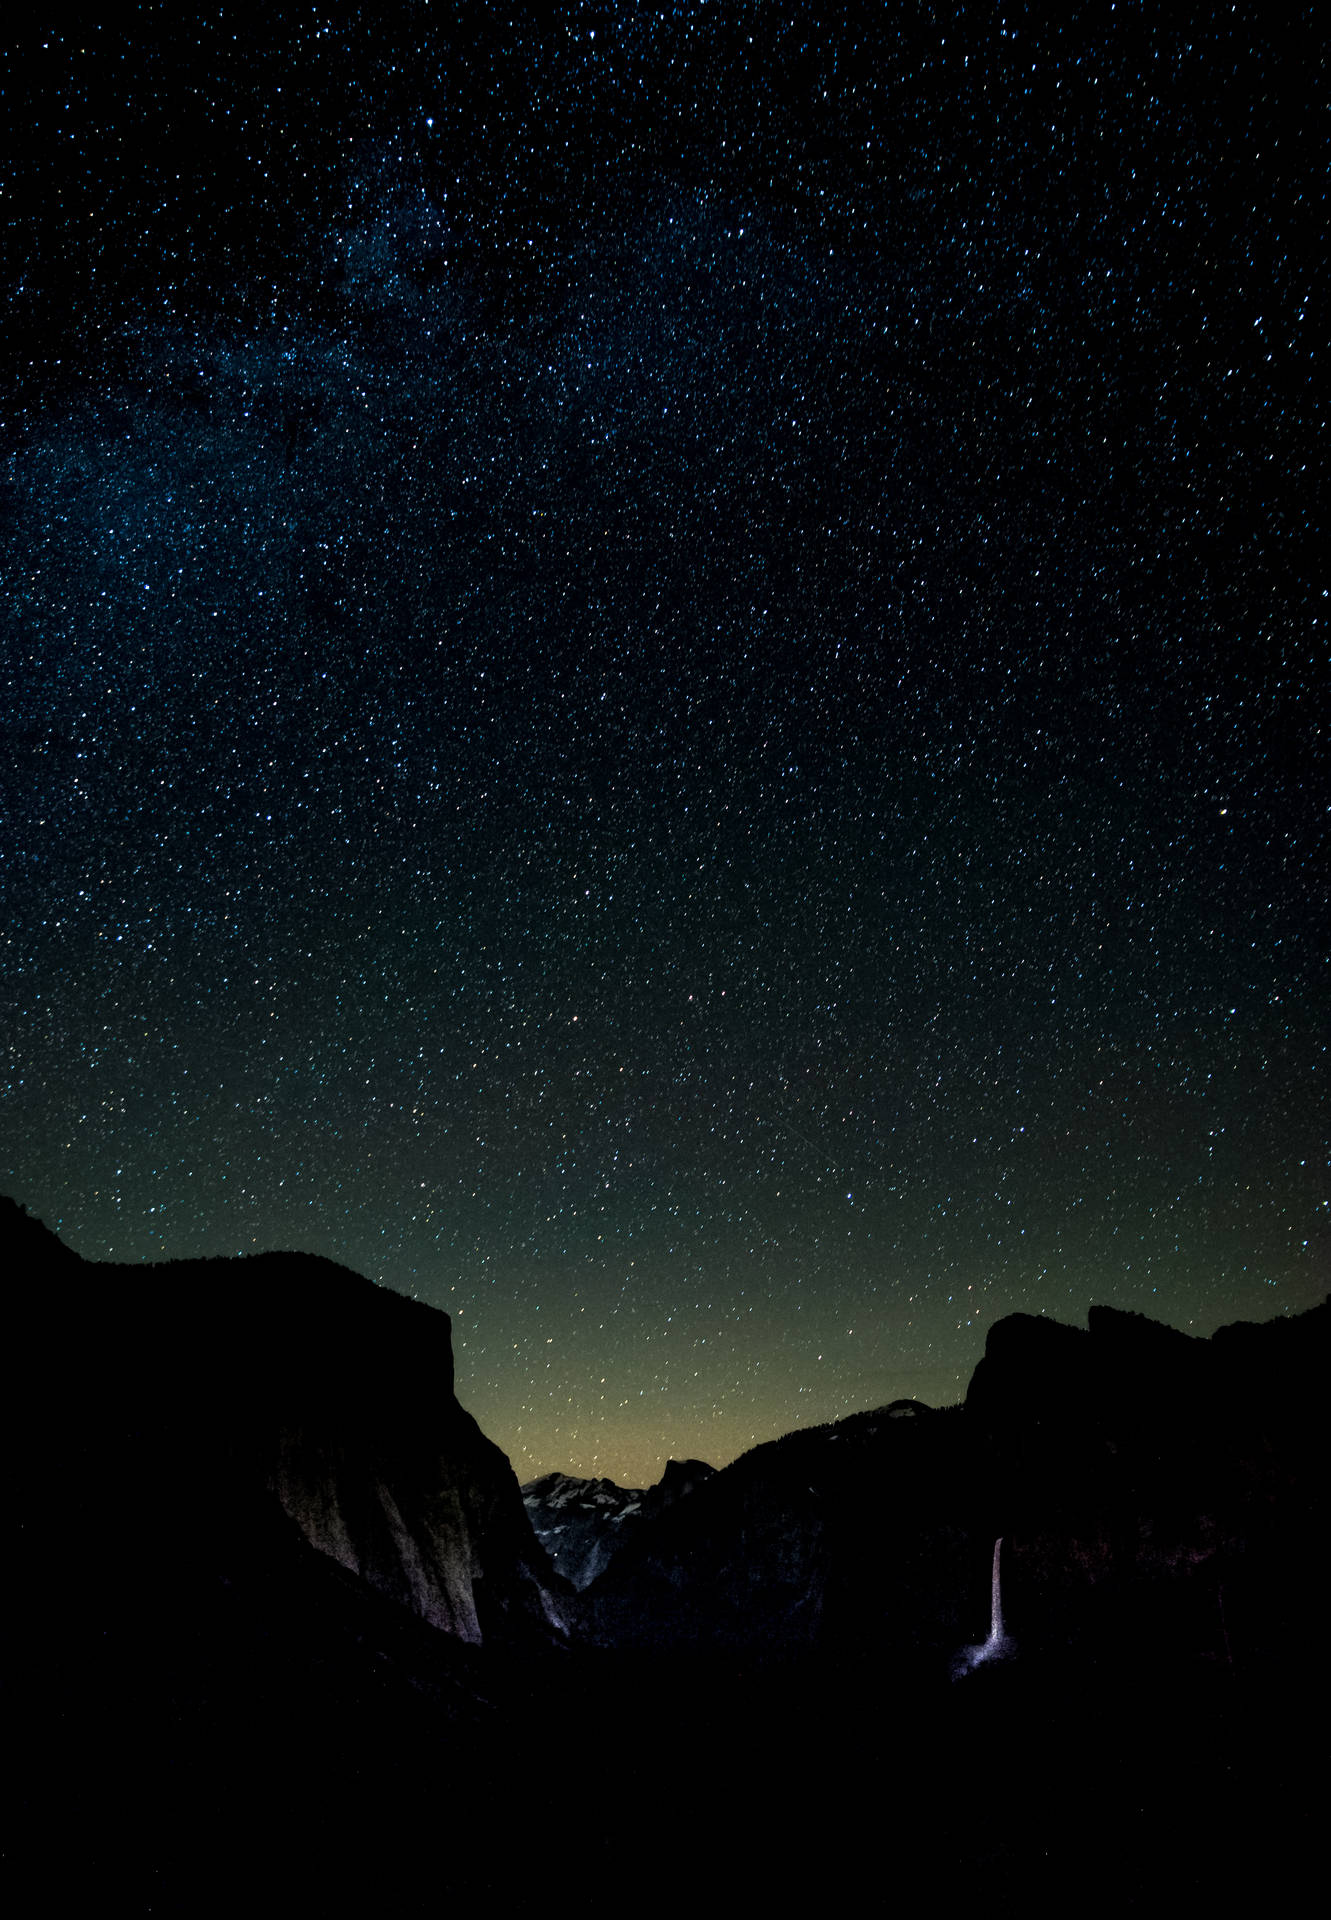 Starry Night - A Wondrous Glimpse Of A Cosmic Art Wallpaper